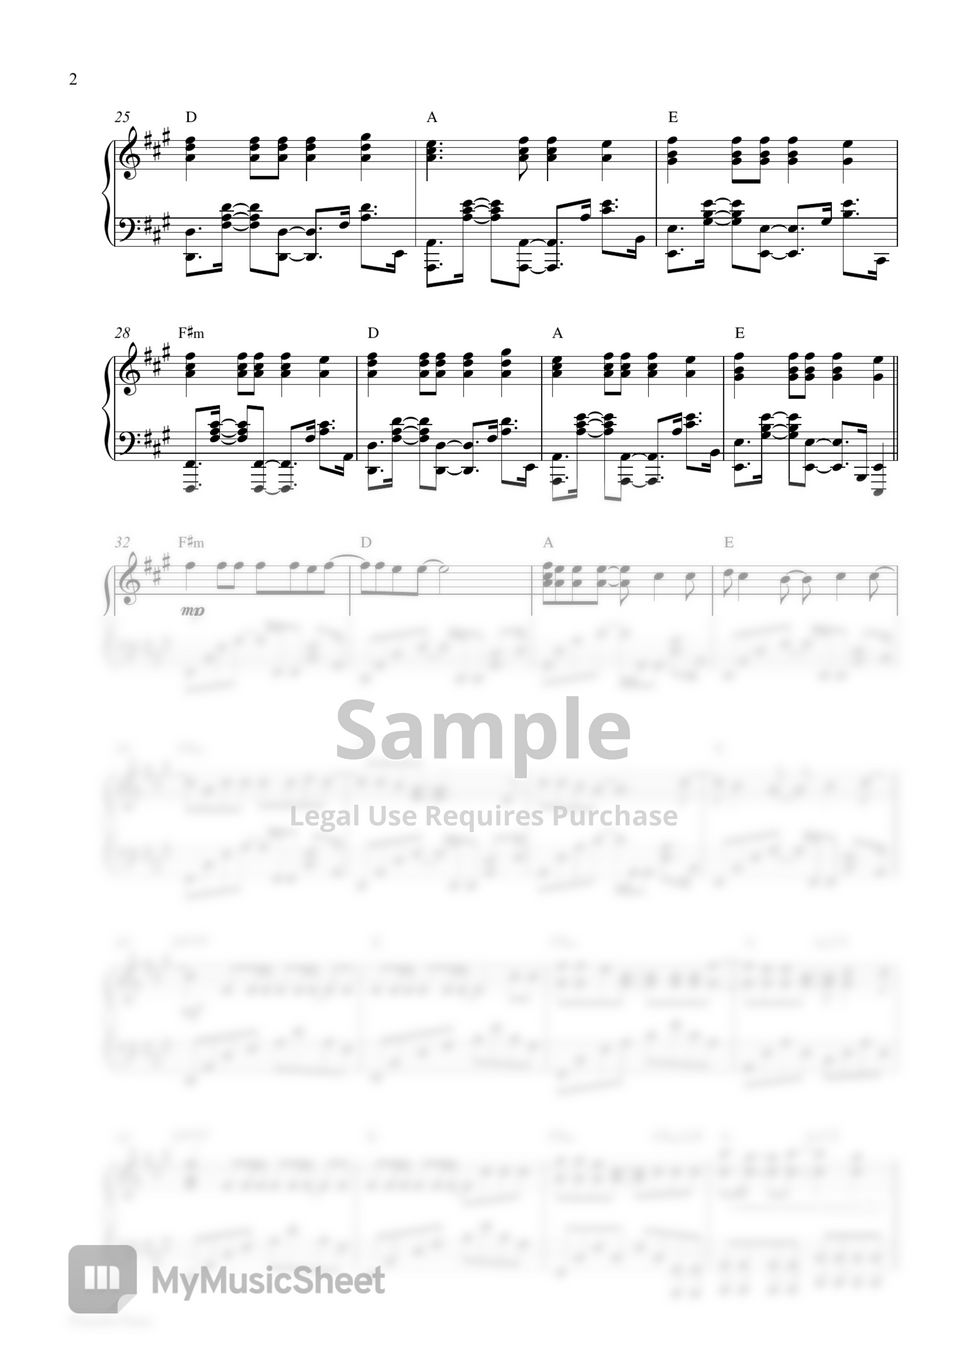 Linkin Park - Numb (Piano Sheet) by Pianella Piano